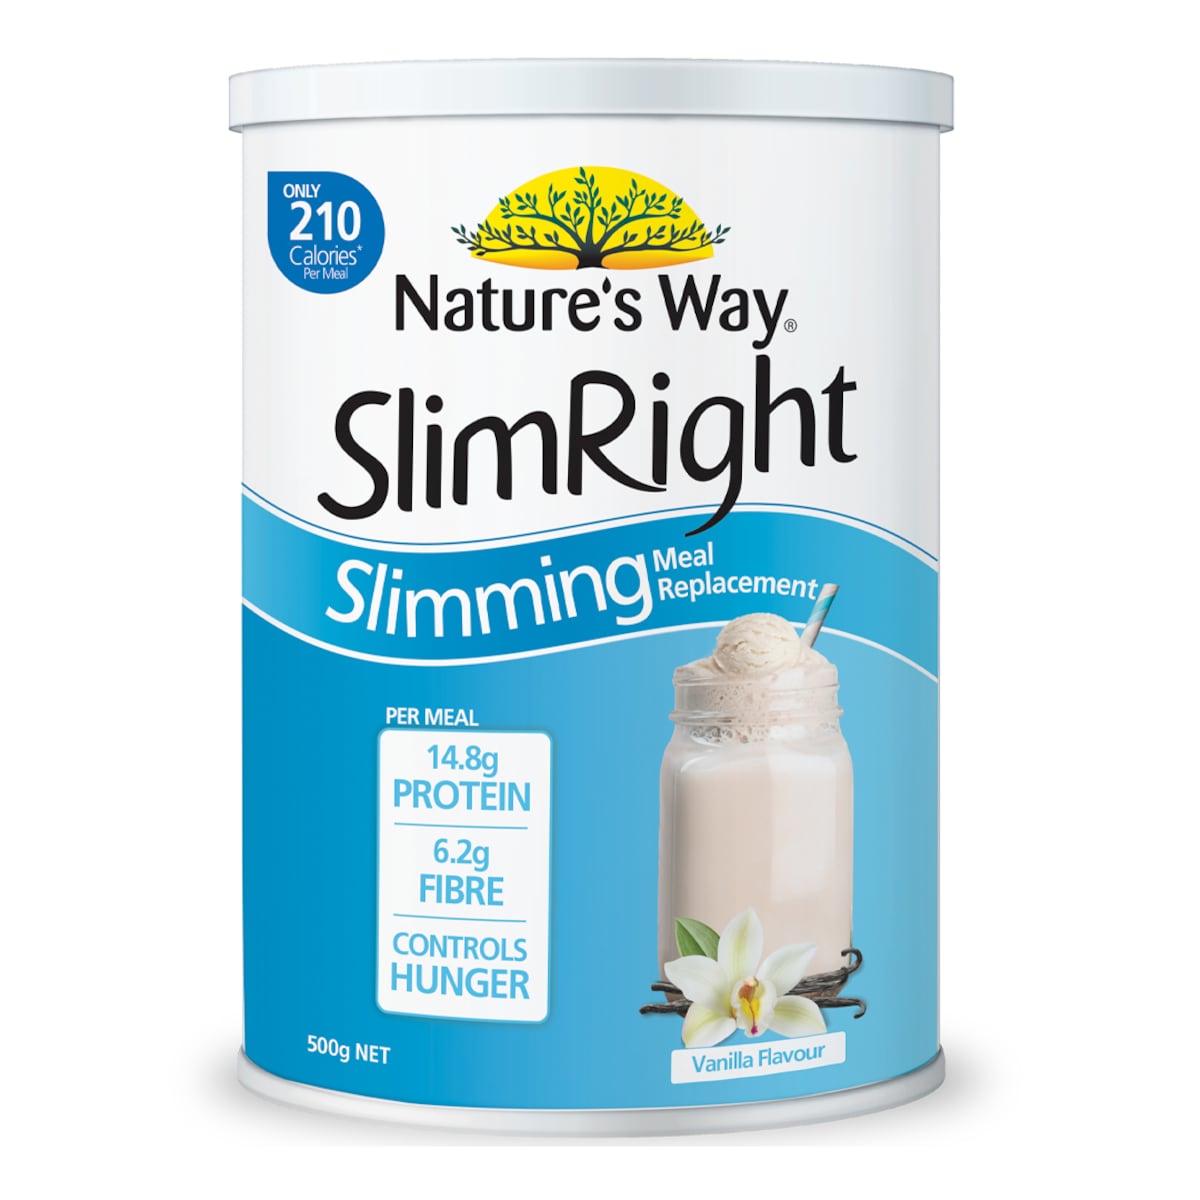 Natures Way Slimright Slimming Meal Replacement Shake Vanilla 500g